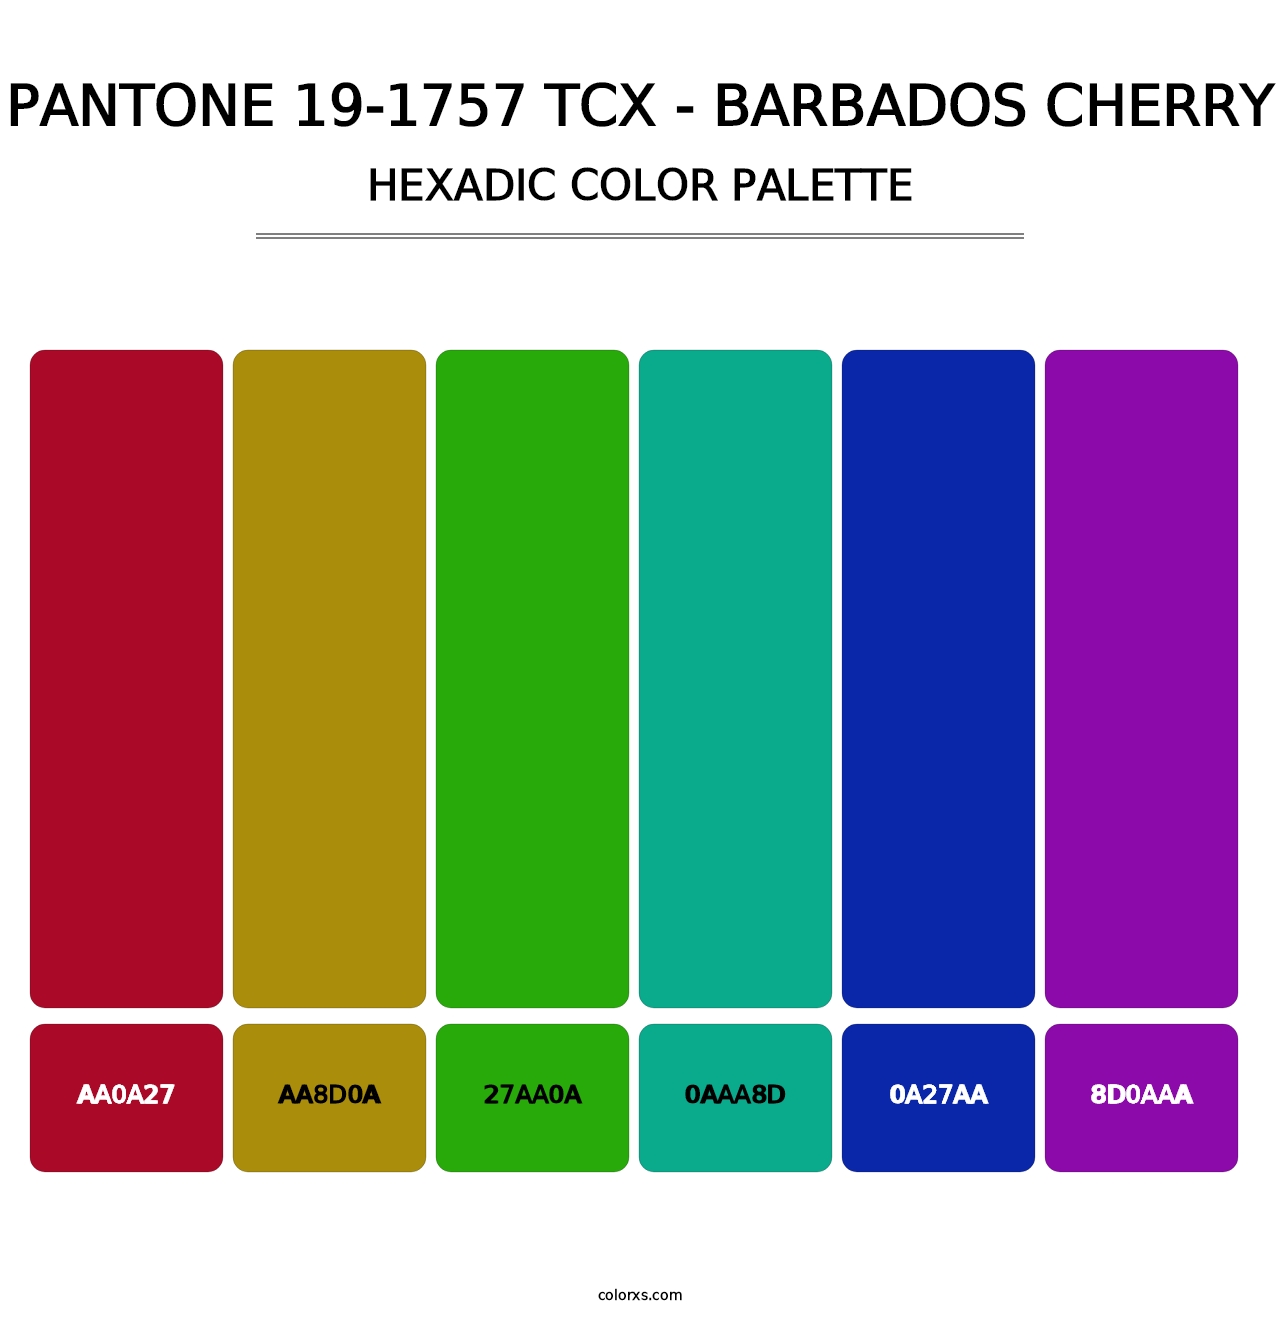 PANTONE 19-1757 TCX - Barbados Cherry - Hexadic Color Palette